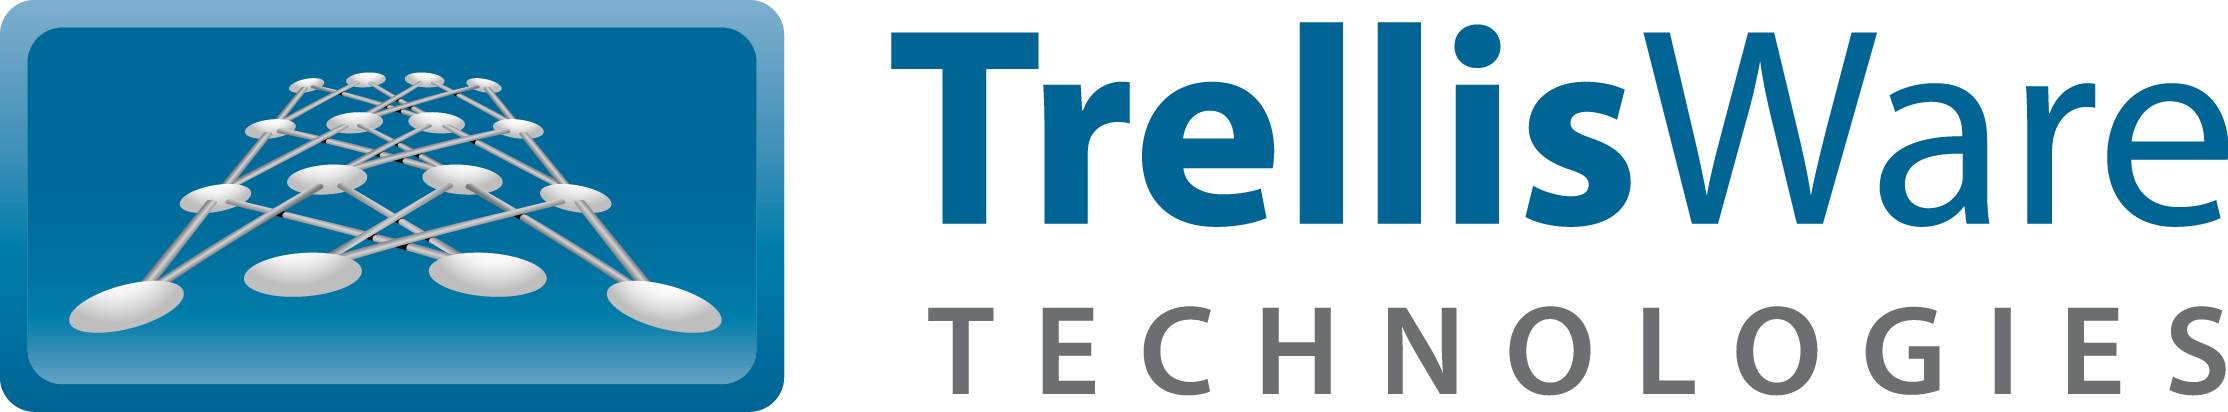 TrellisWare Technologies logo